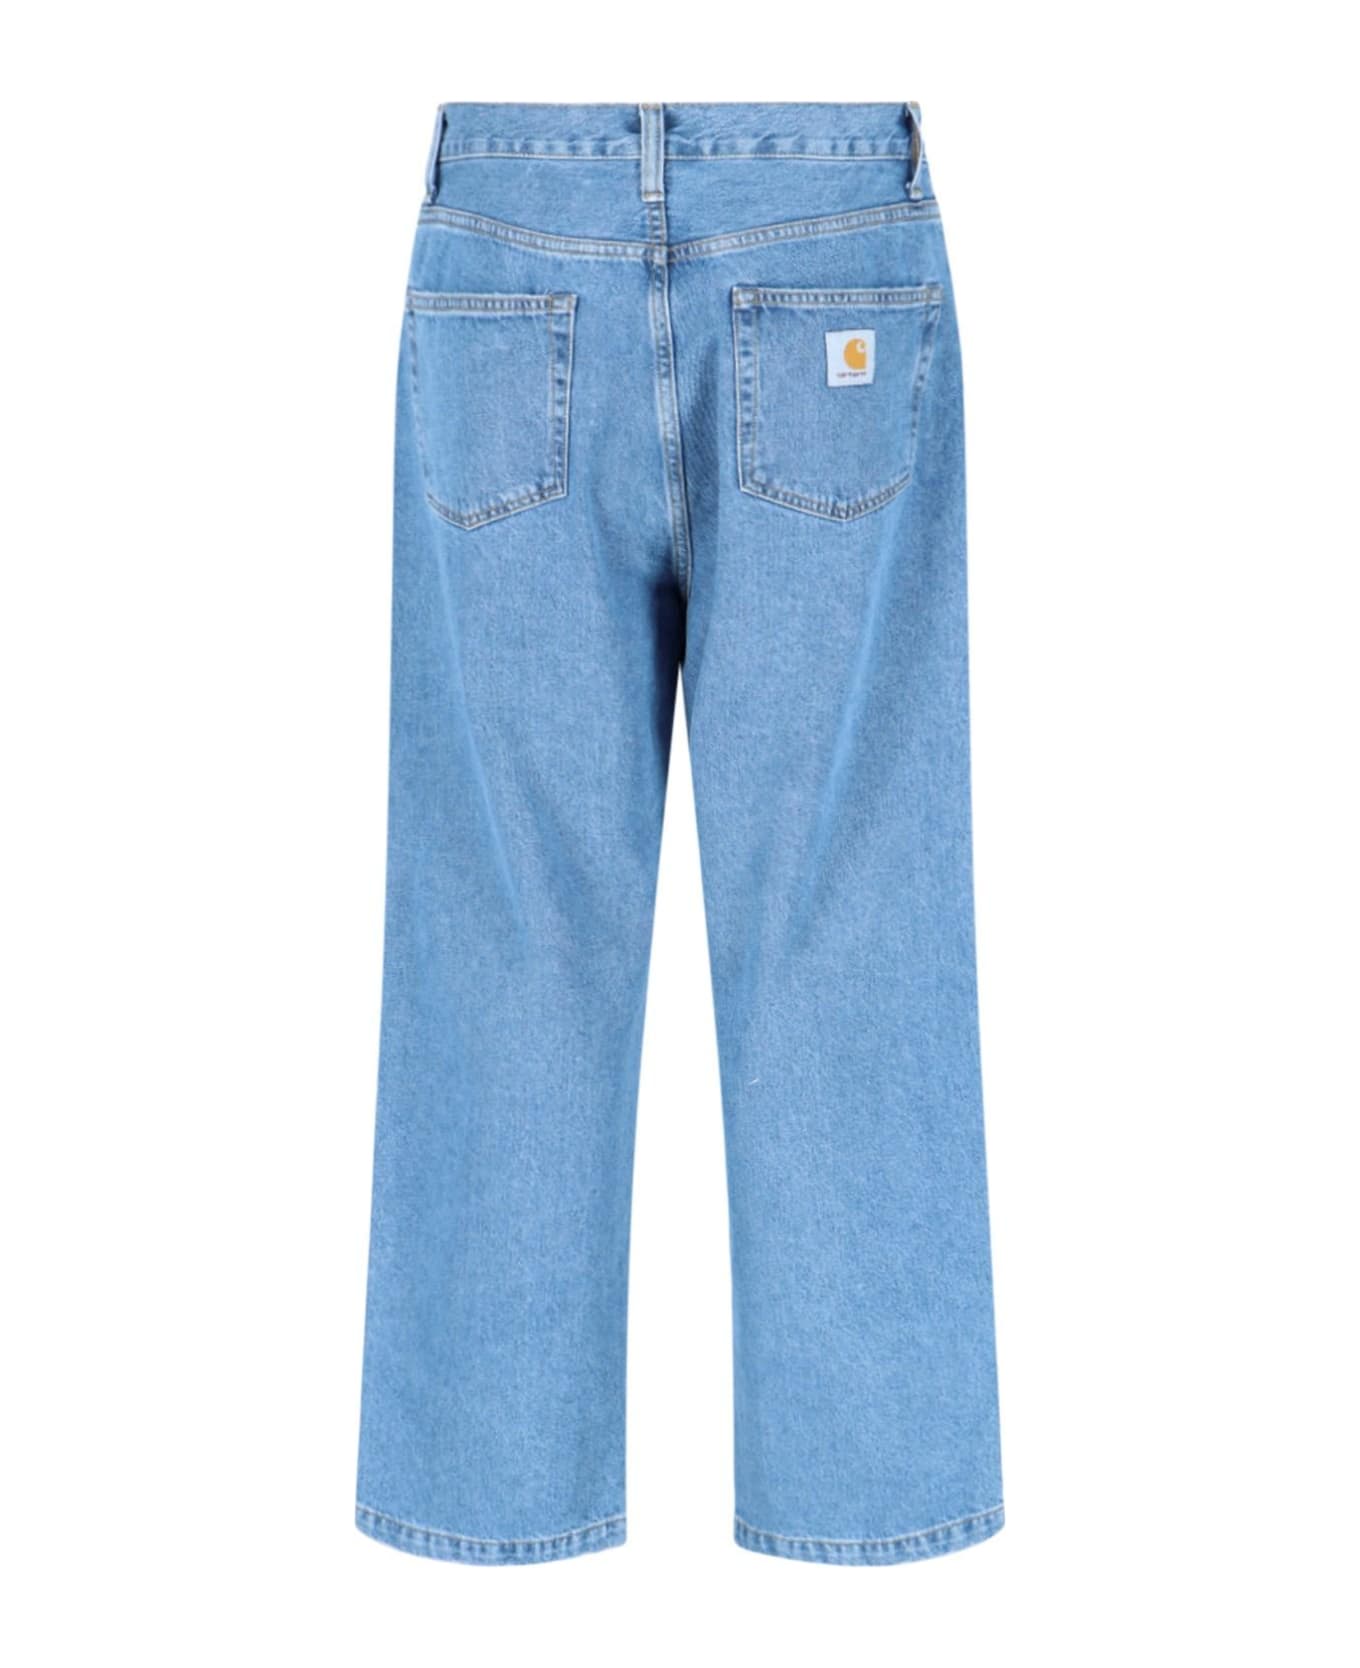 Carhartt Landon Jeans - Blue Heavy Stone Wash